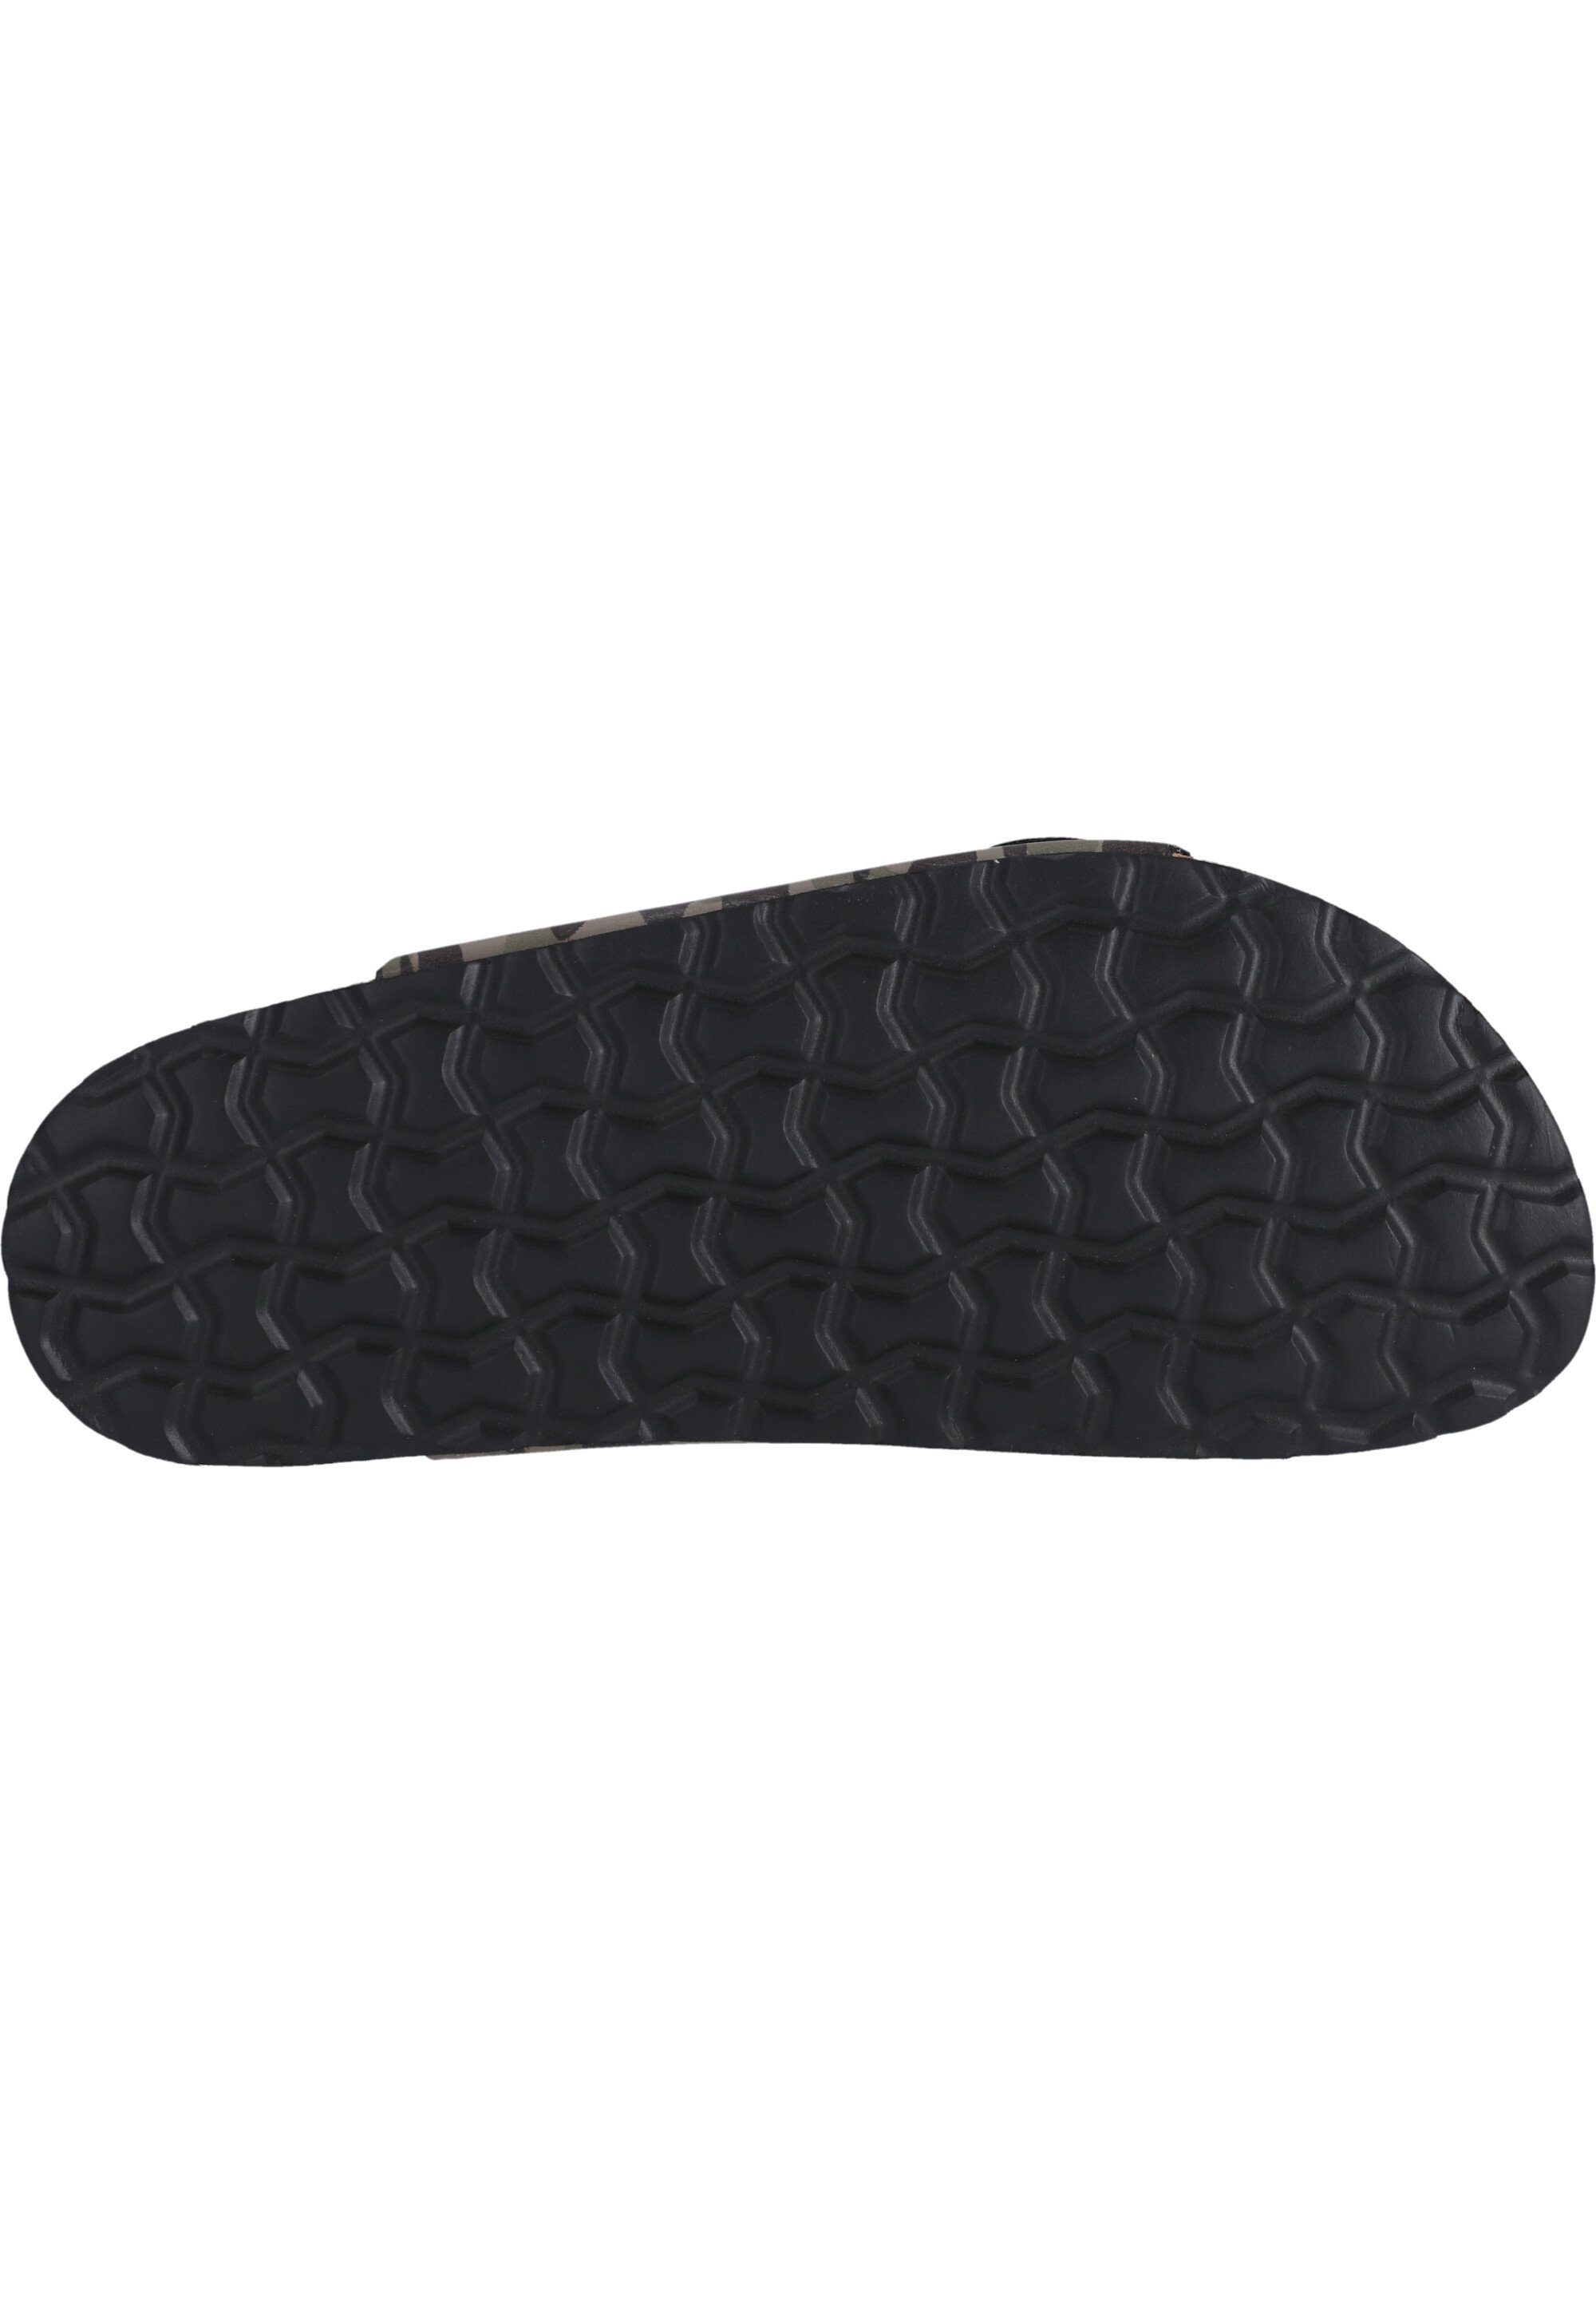 CRUZ Hardingburg Sandale mit Fußbett ergonomischem khaki-schwarz